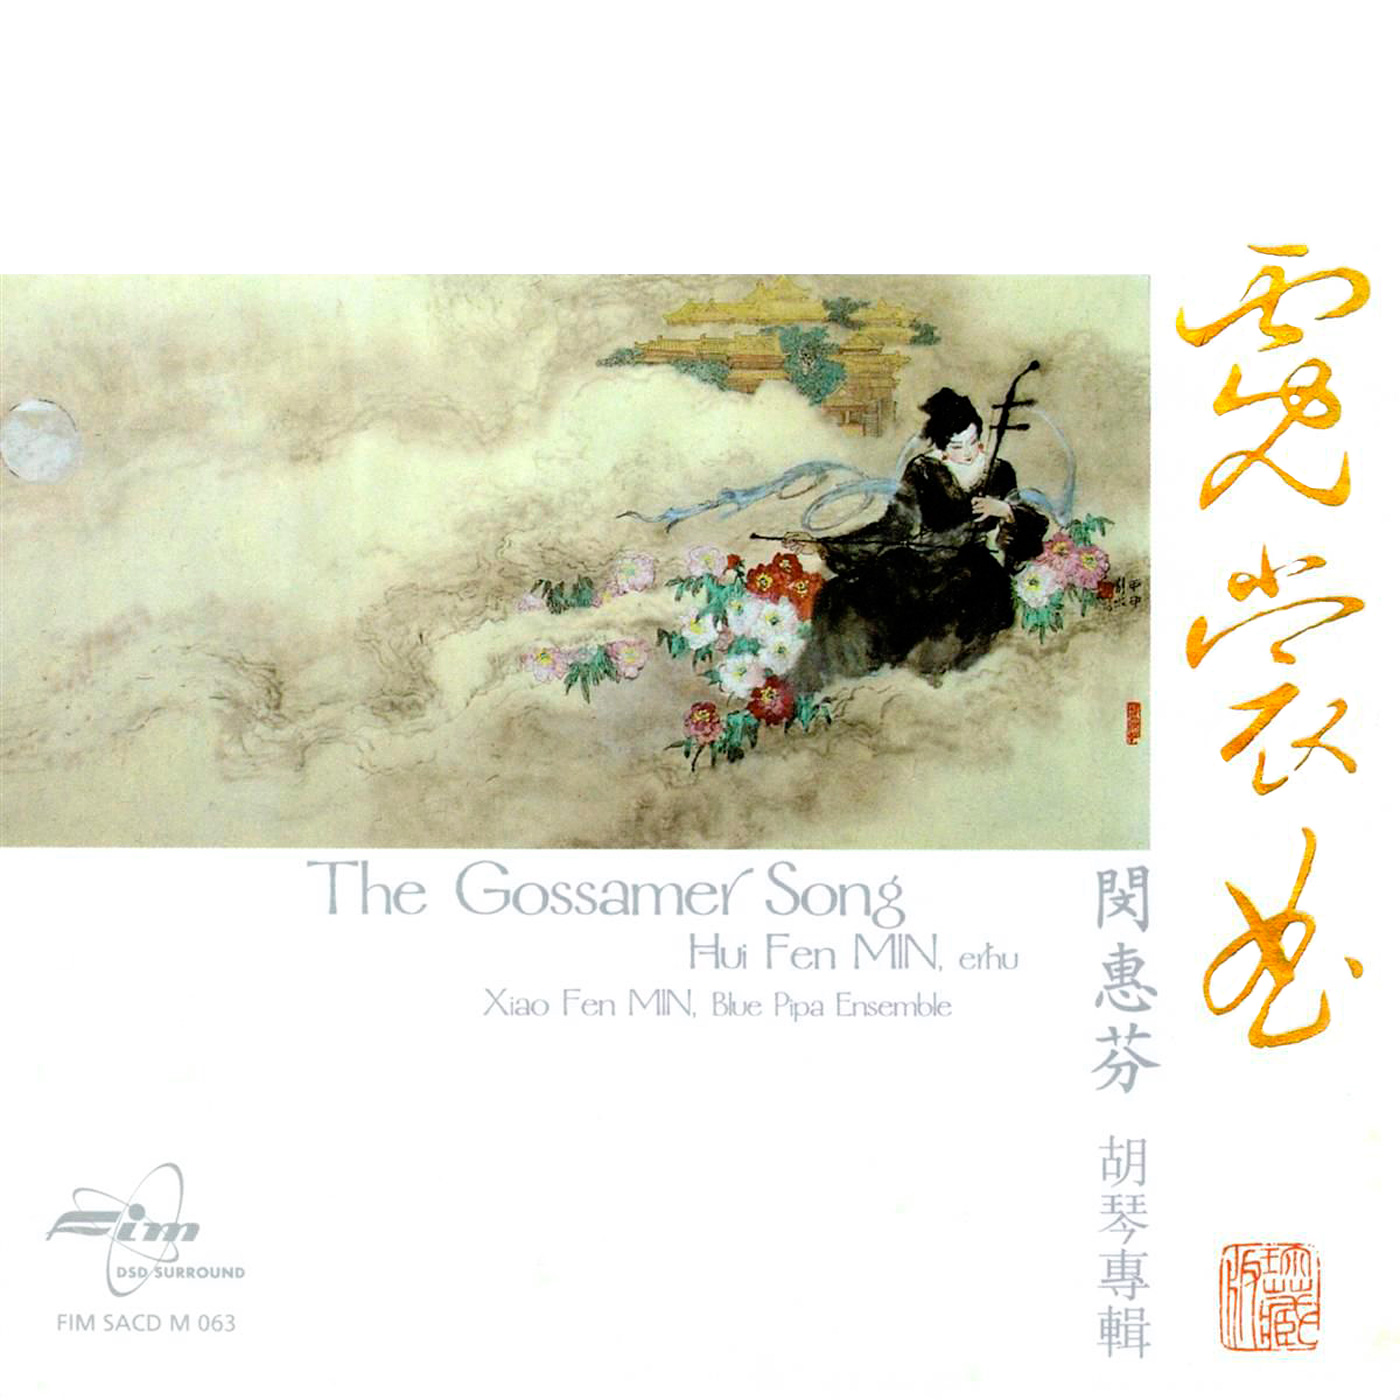 Hui Fen Min, Blue Pipa Ensemble, Xiao Fen Min – The Gossamer Song (2004) MCH SACD ISO + FLAC 24bit/96kHz